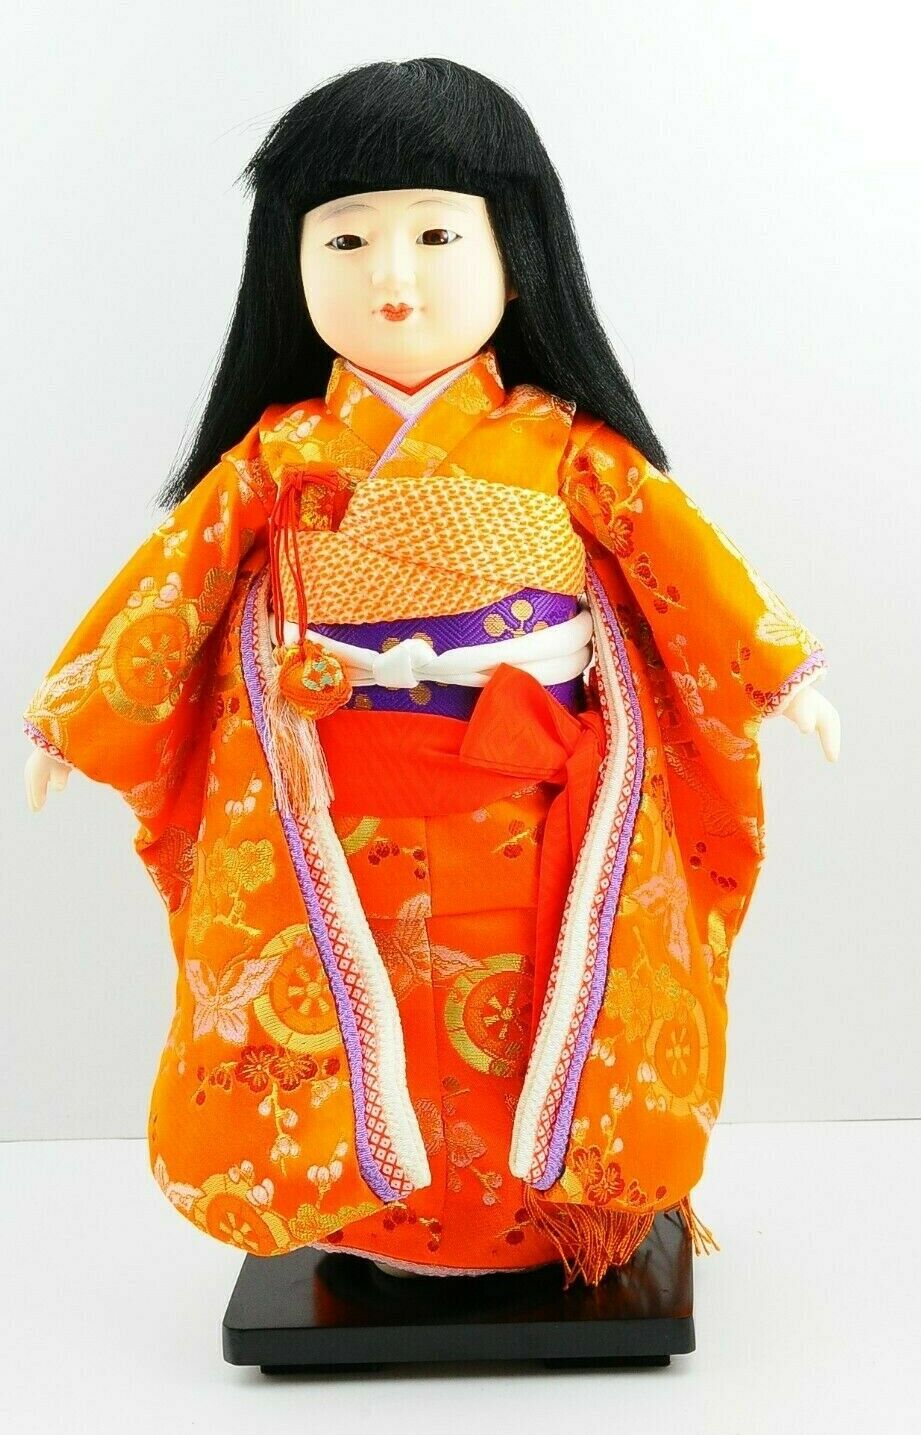 Vintage Japanese Ichimatsu girl's doll Figure Plush 16 inch 41cm height